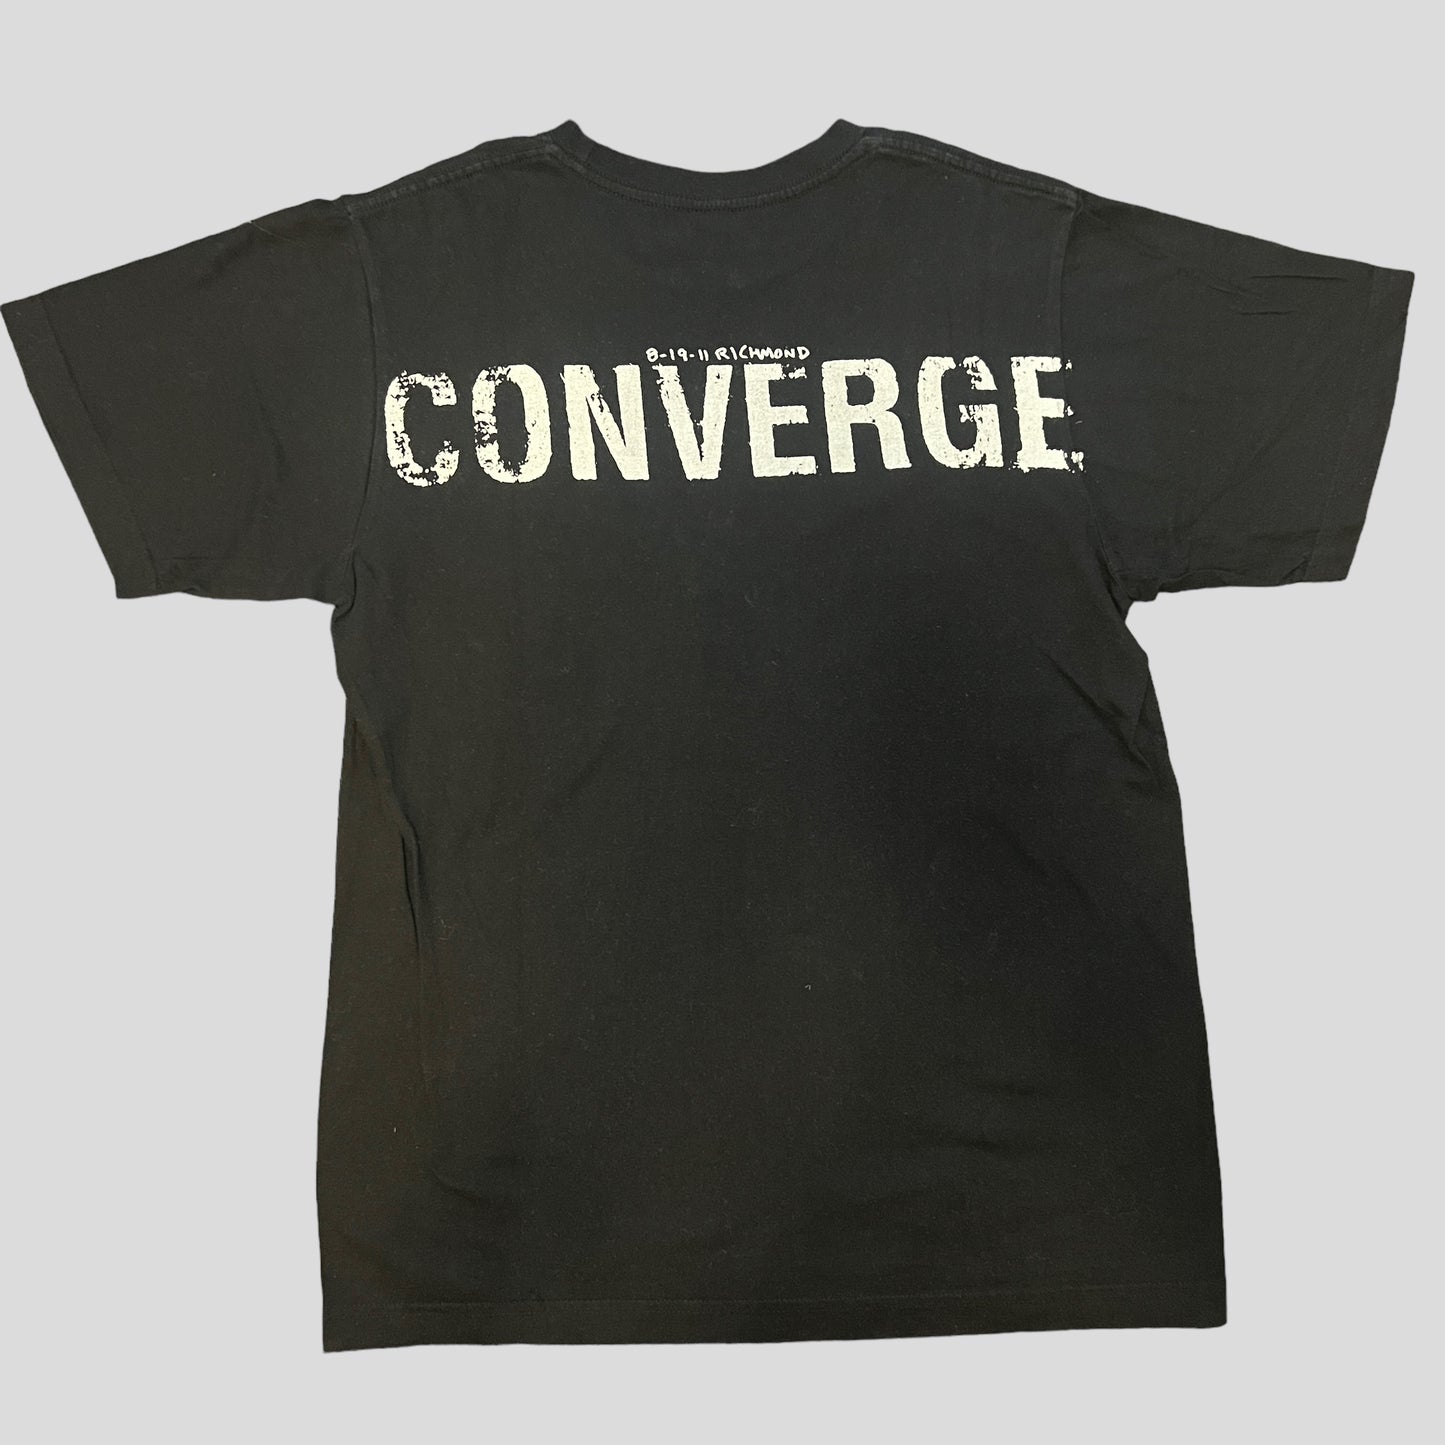 Converge Band 8-19-2011 Richmond VA Show T-Shirt Size Medium